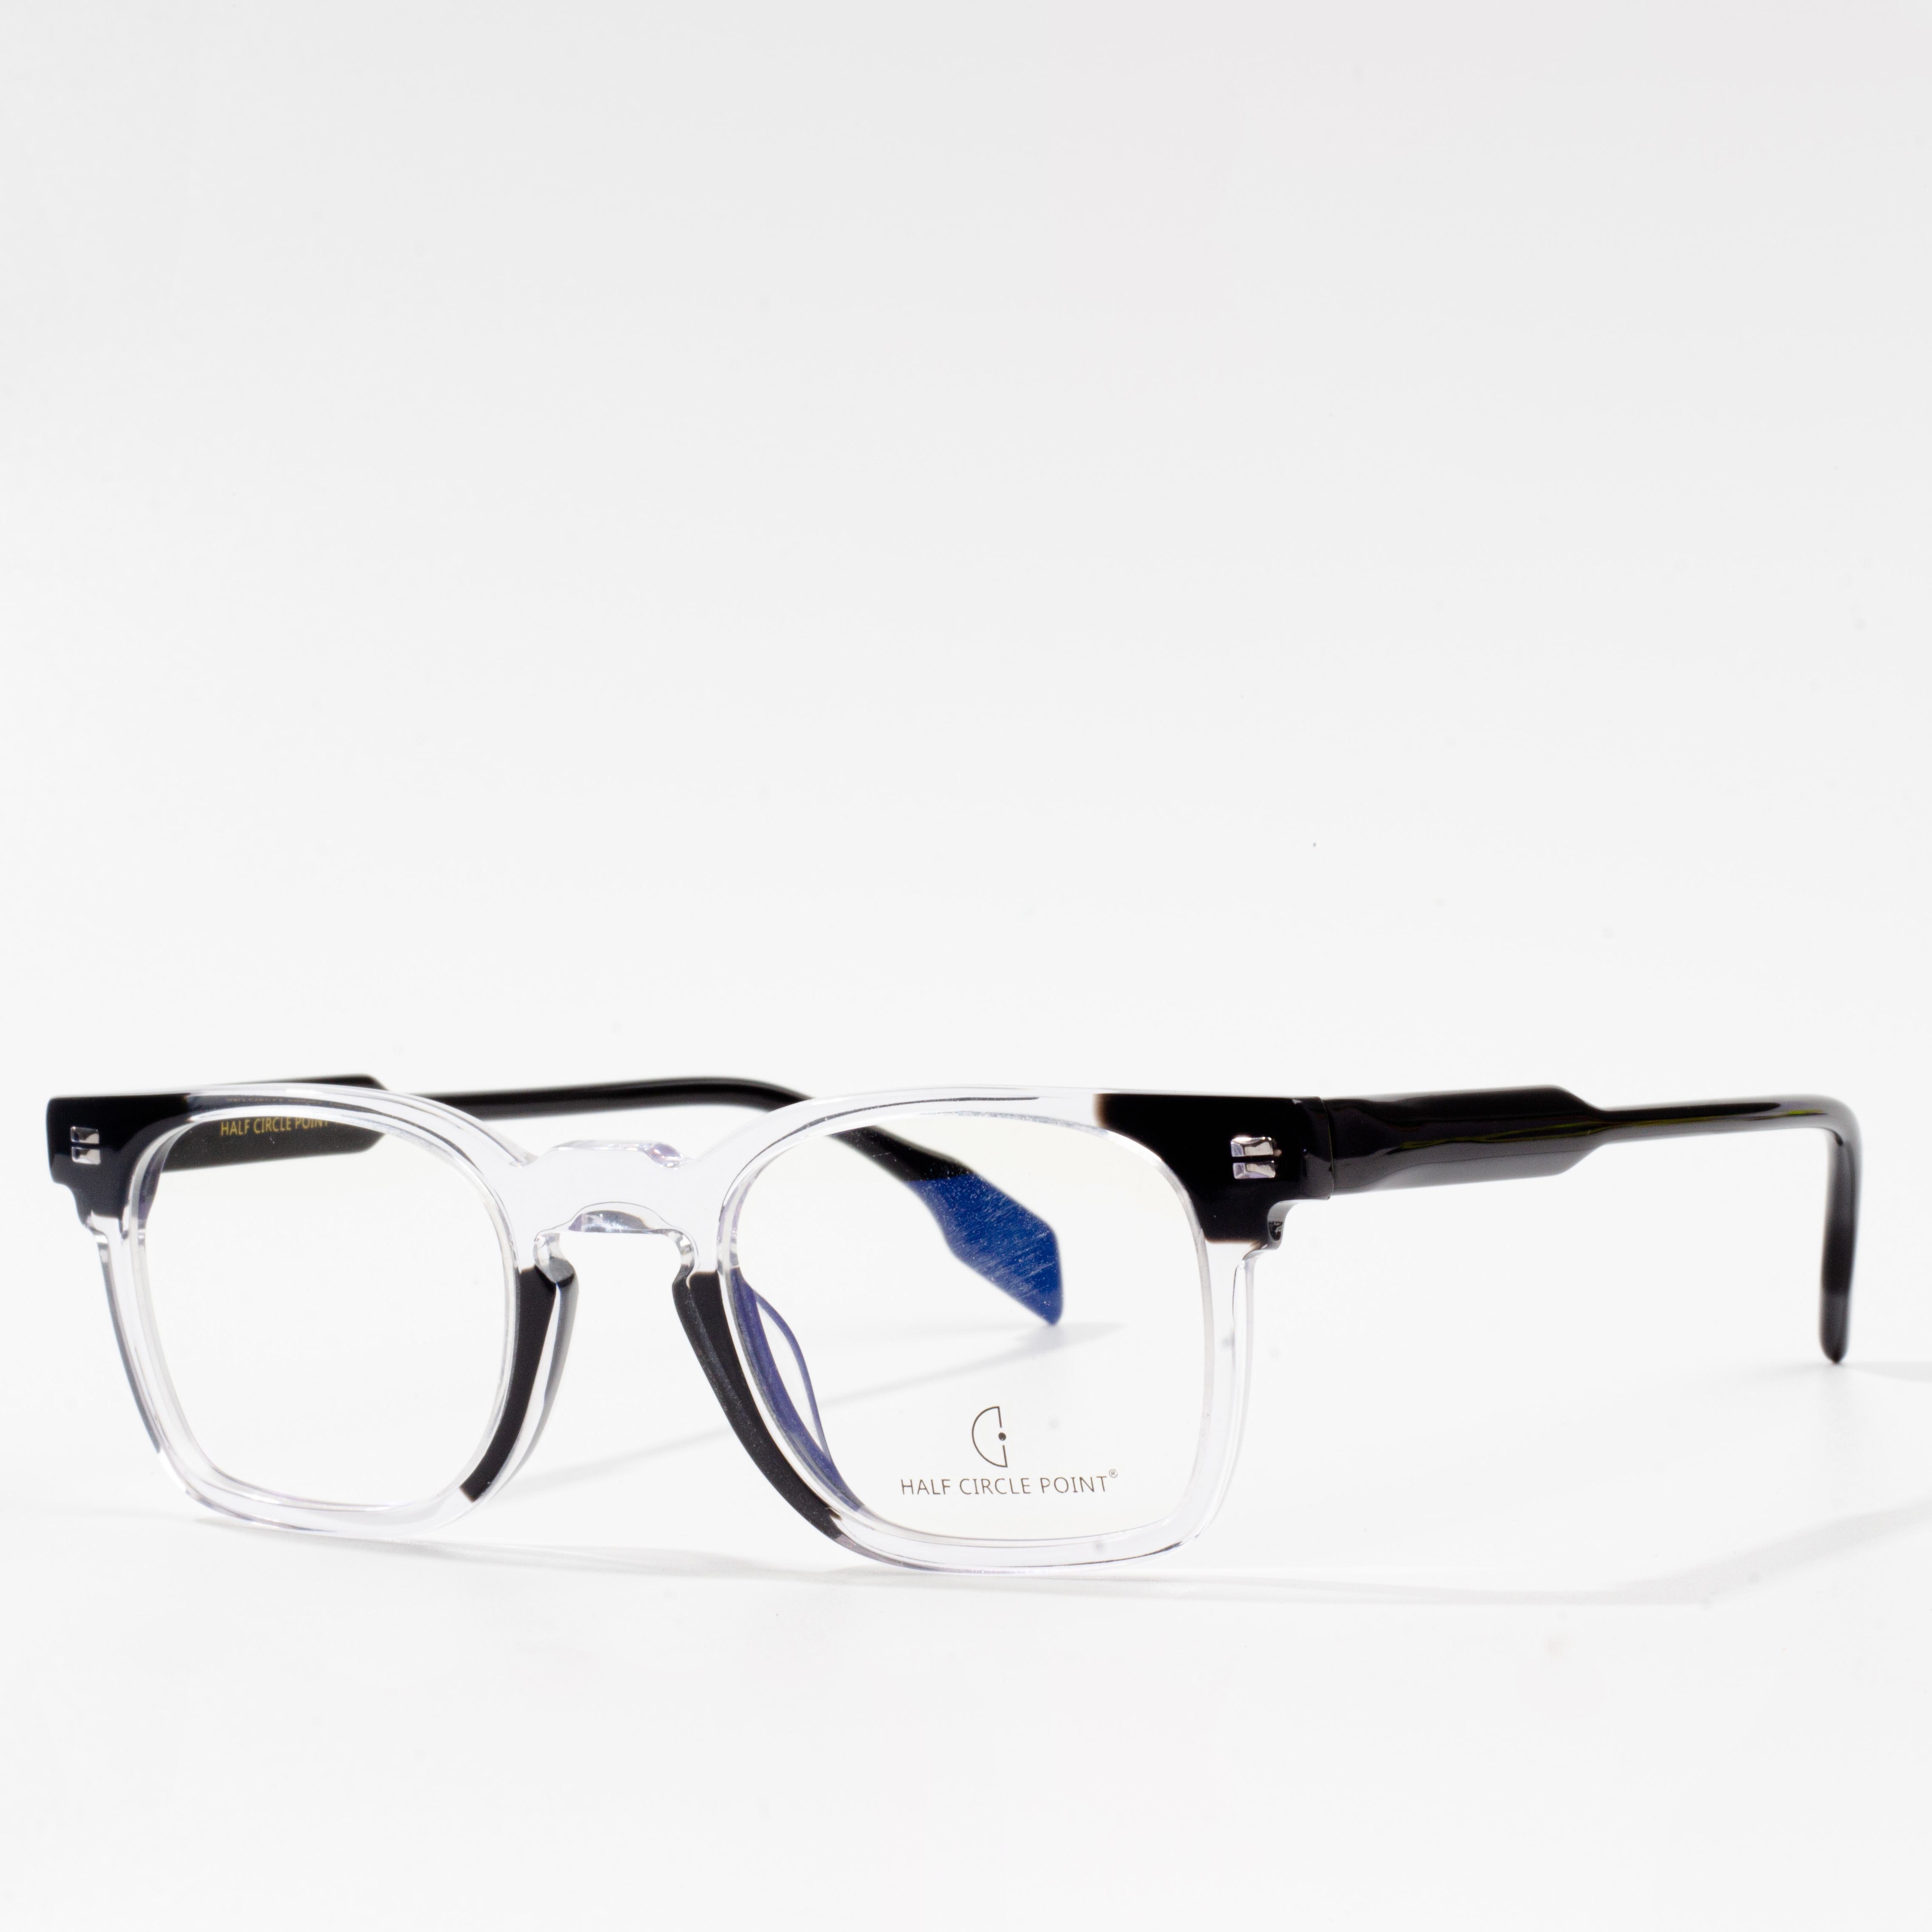 eyeglas frame manufacturers